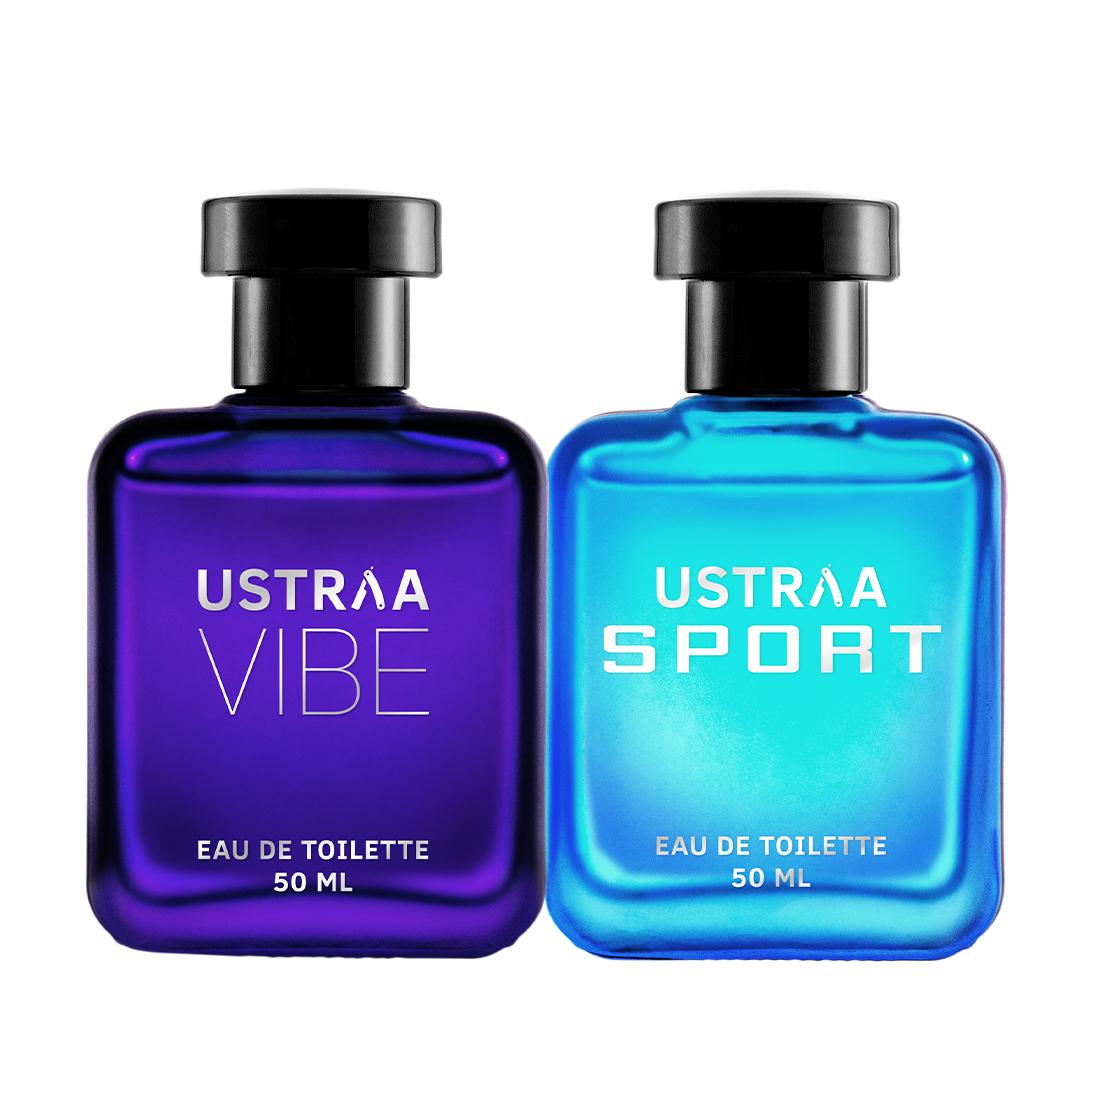 EDT Vibe & Sports - Set of 2 - Perfume for Men- 50ml each